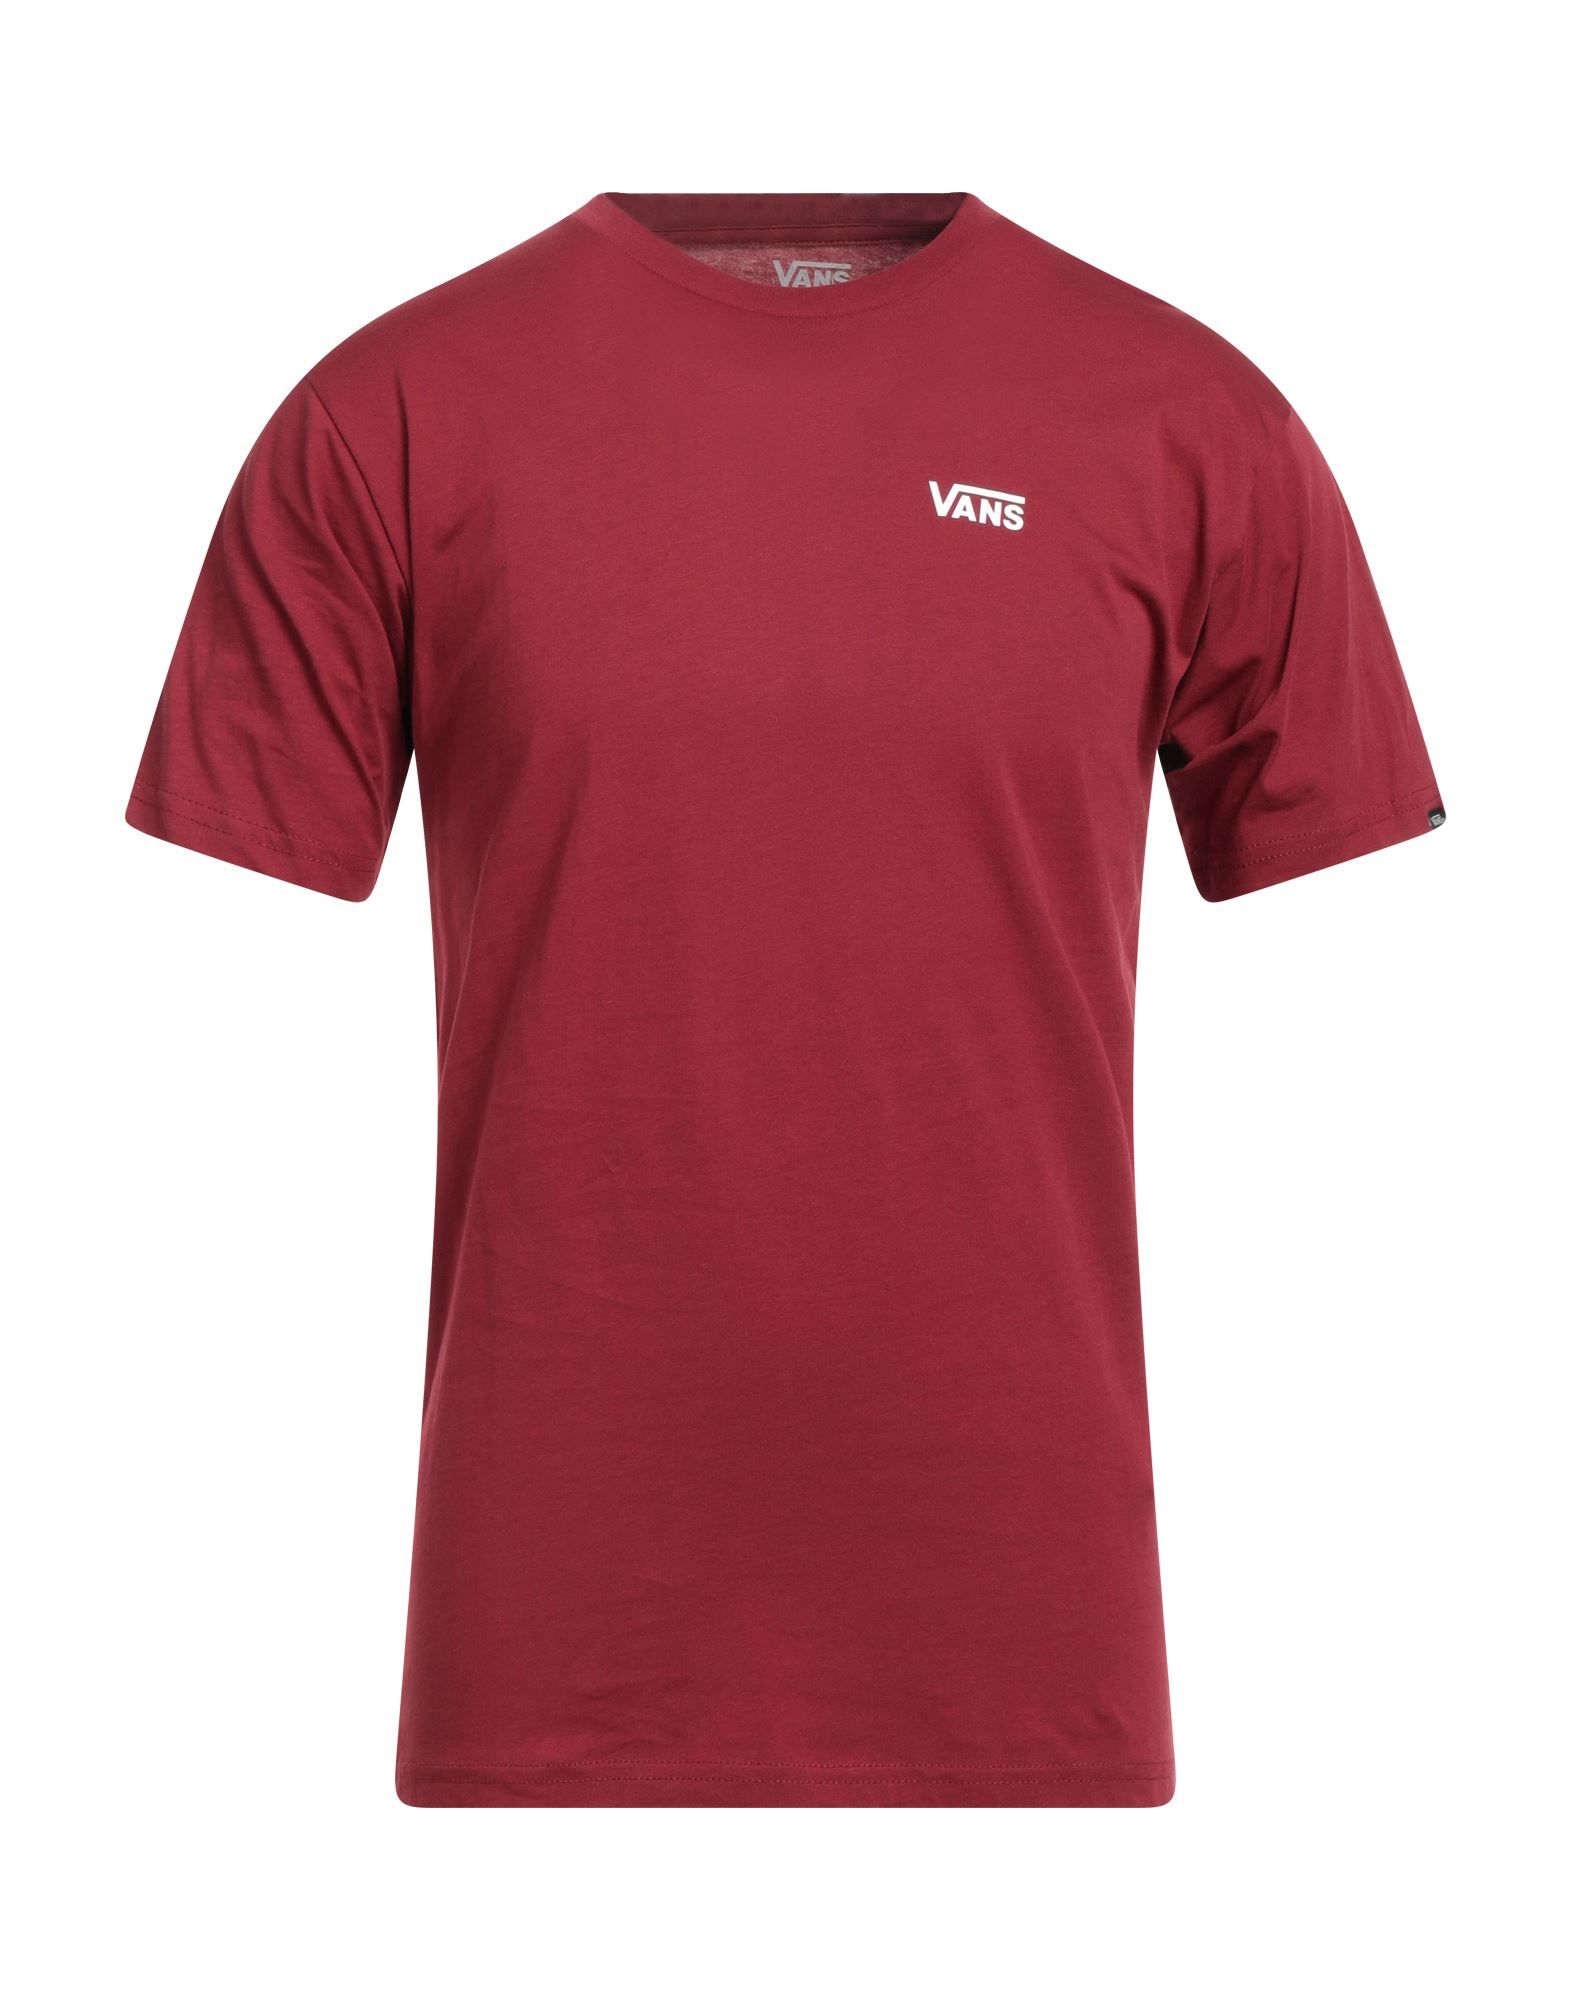 Vans Man T-shirt Burgundy Size Xs Cotton In Red